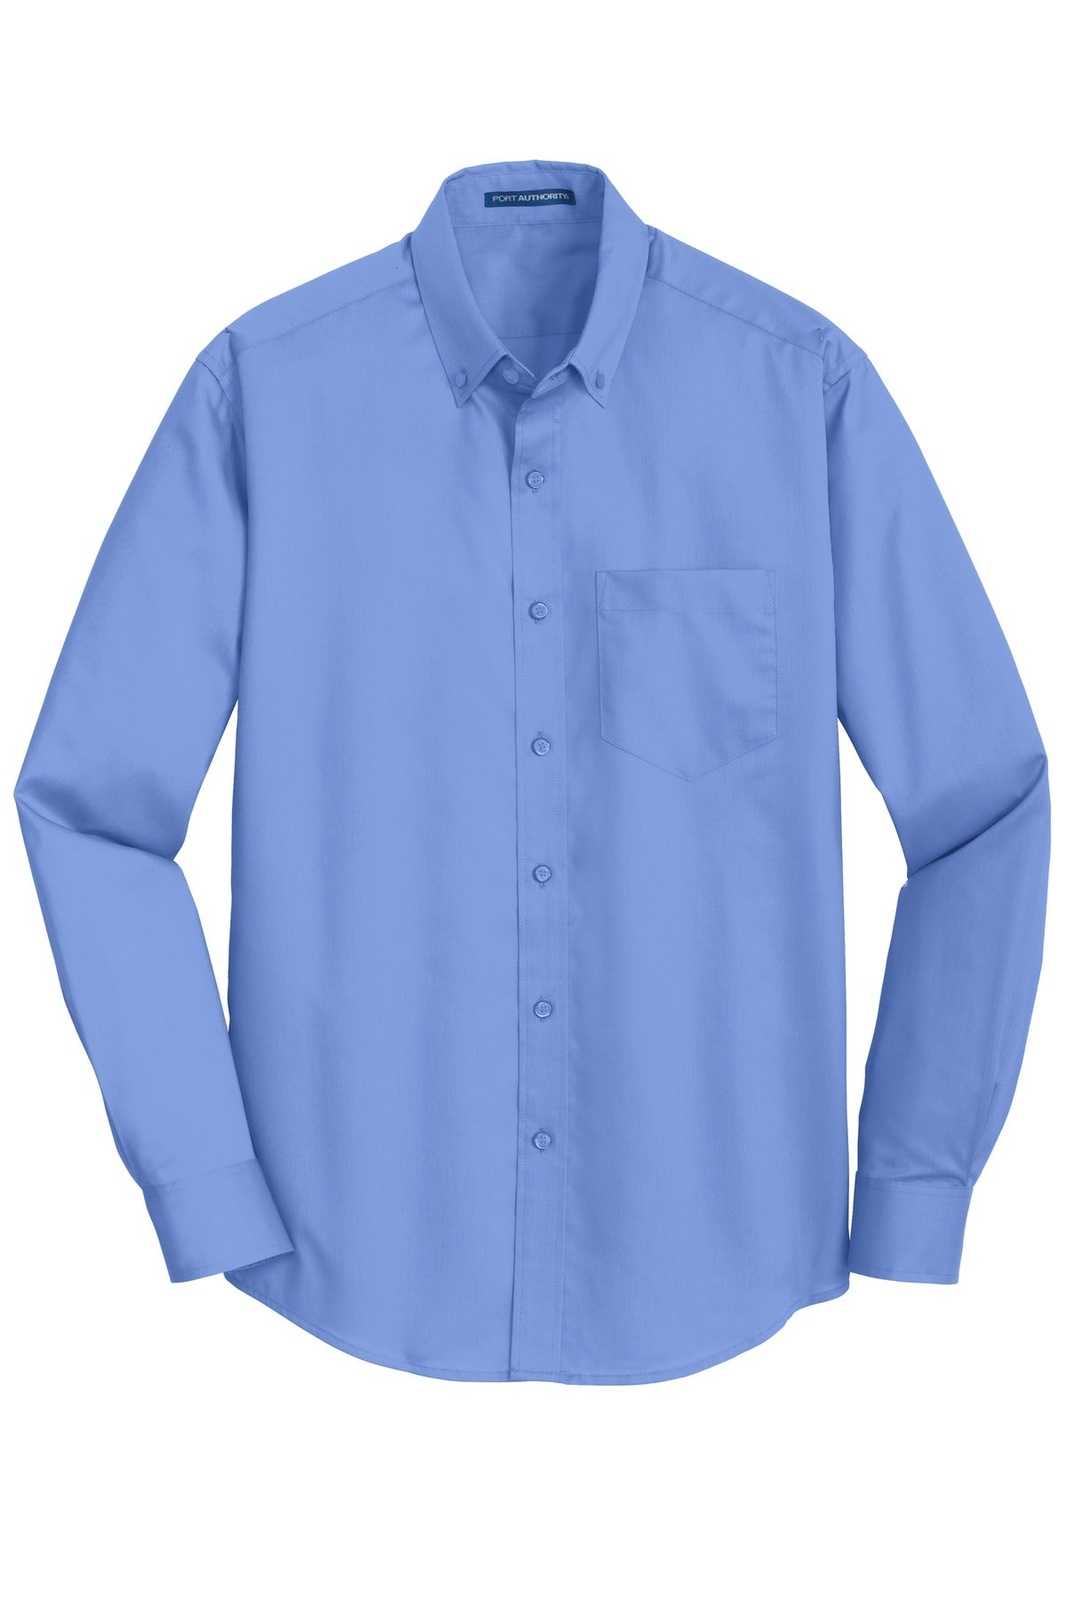 Port Authority S663 Superpro Twill Shirt - Ultramarine Blue - HIT a Double - 5